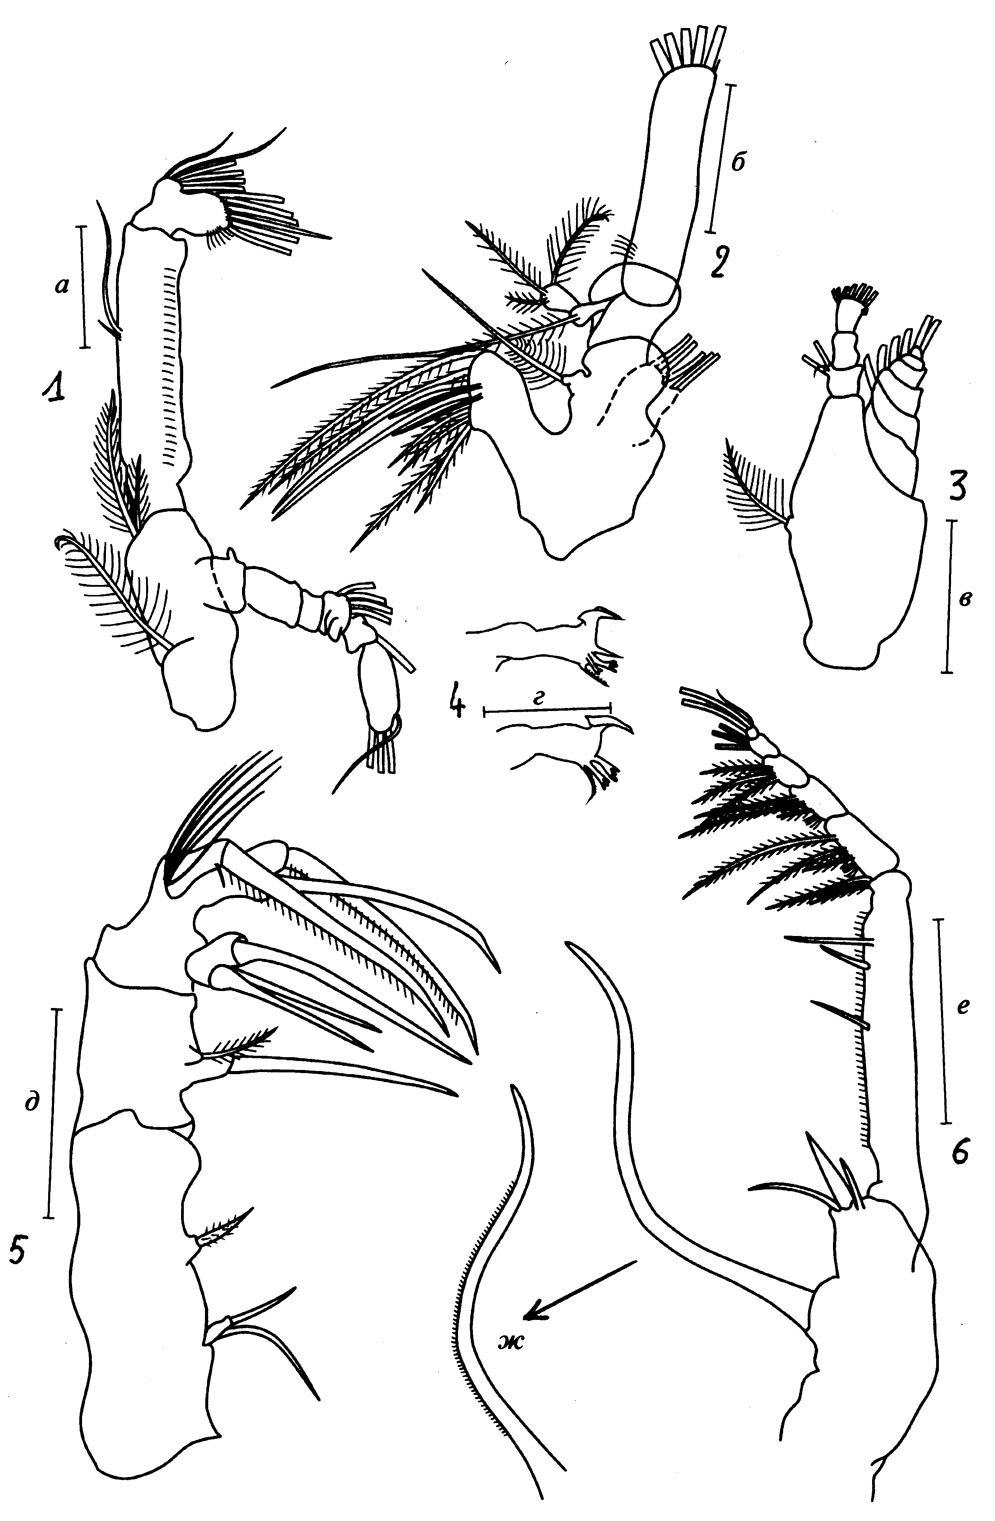 Species Heterorhabdus tanneri - Plate 11 of morphological figures